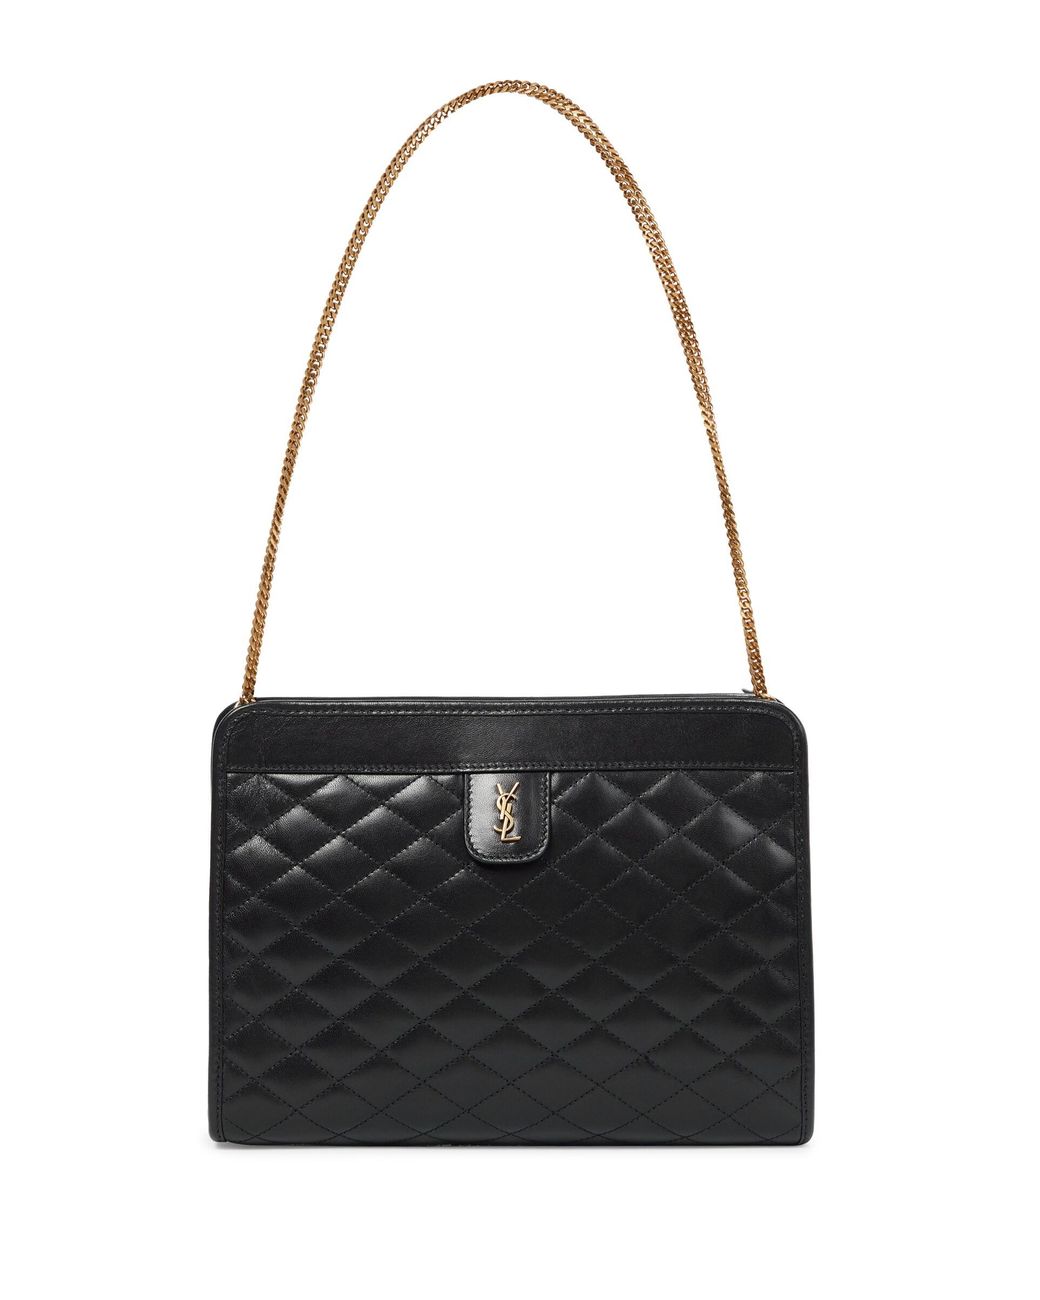 Victoire leather handbag Saint Laurent Black in Leather - 26050067